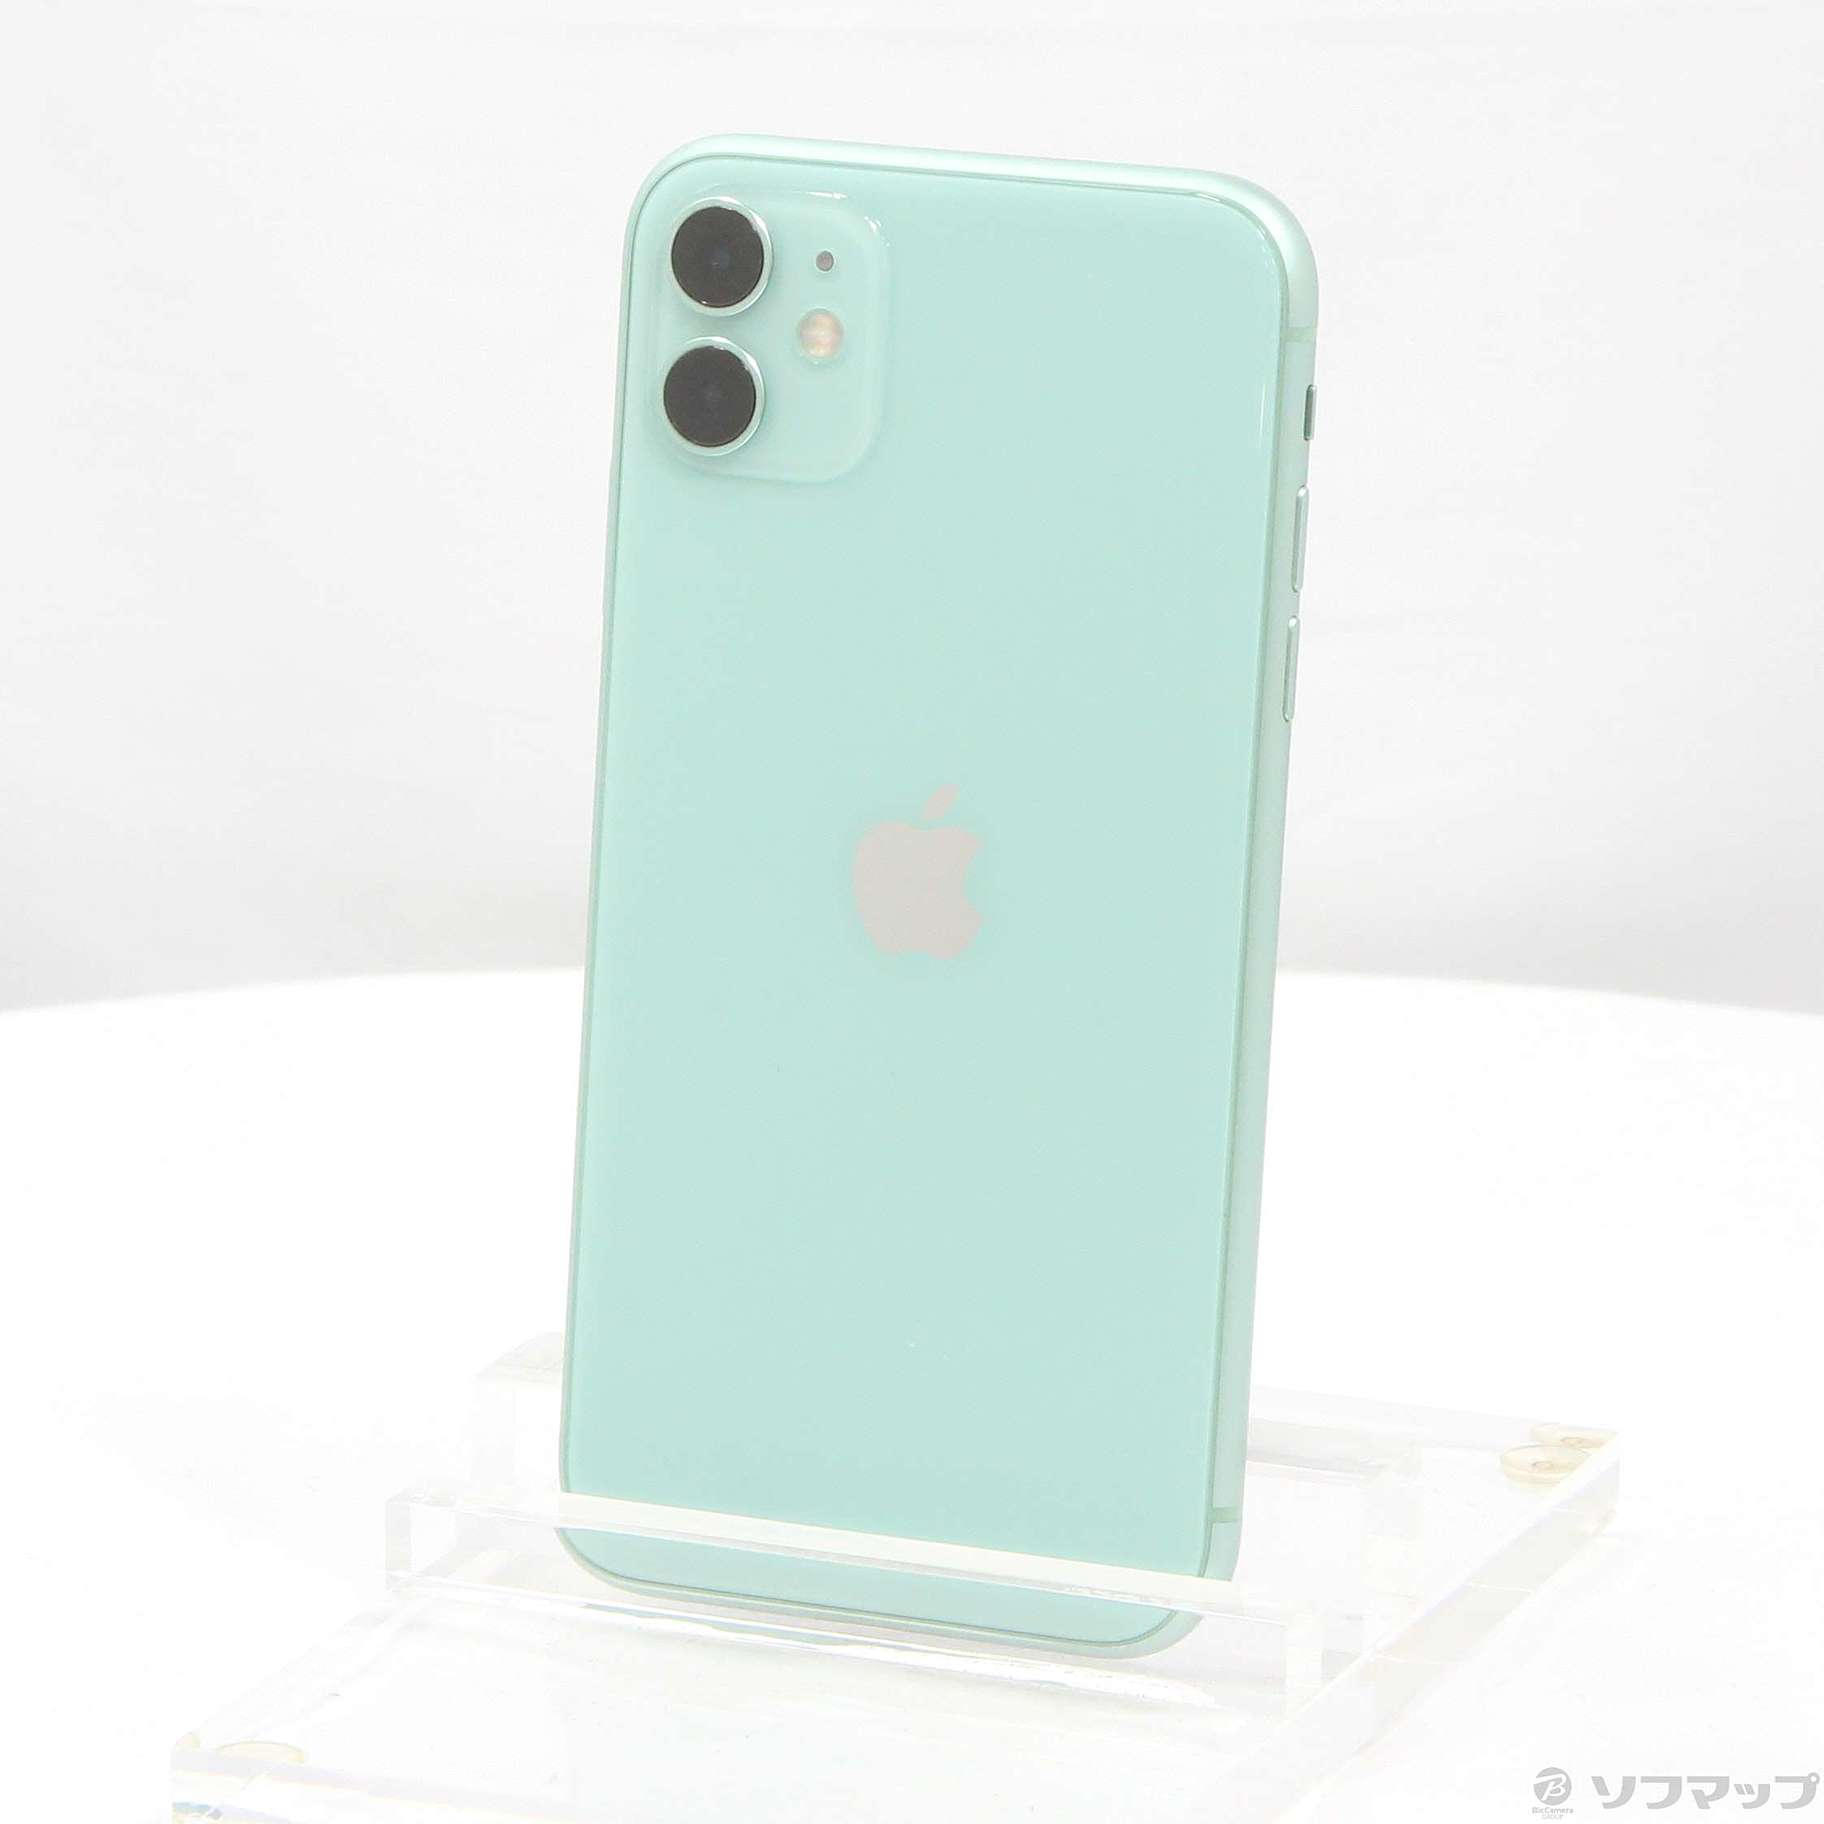 iPhone 11 64GB SIMフリー 中古(白ロム)価格比較 - 価格.com